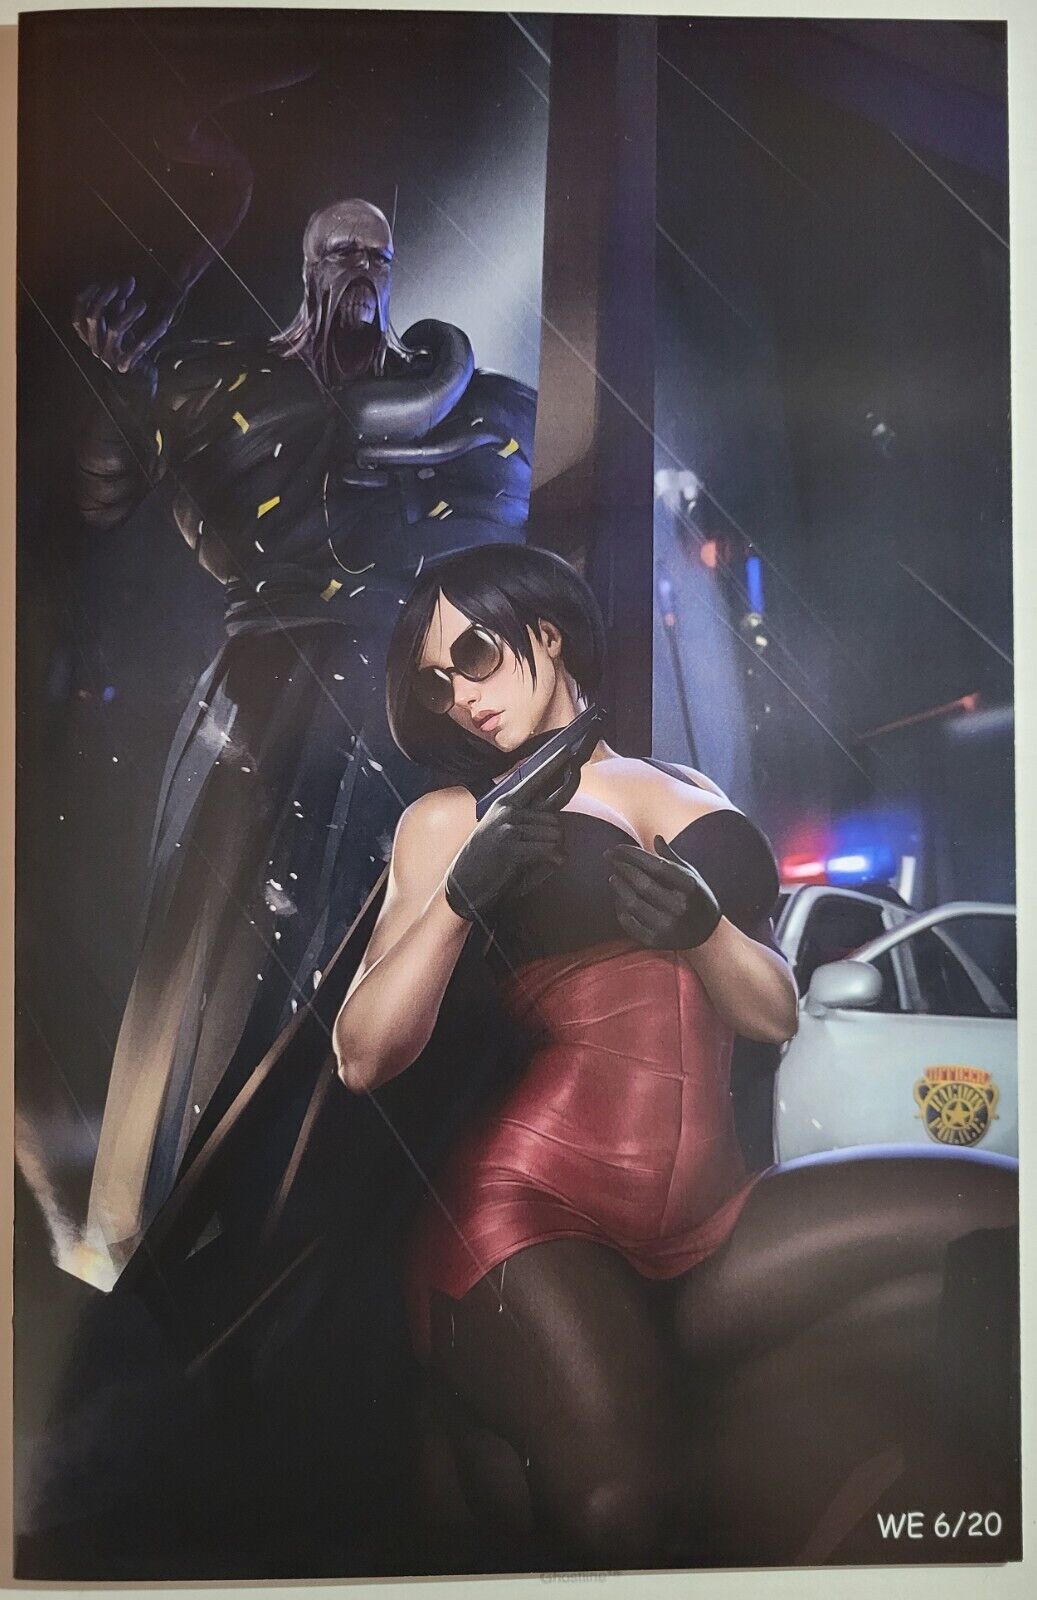 Duty Calls Girls #1 Resident Evil Ada Wong Glasses Cosplay URUKA Variant LTD 20